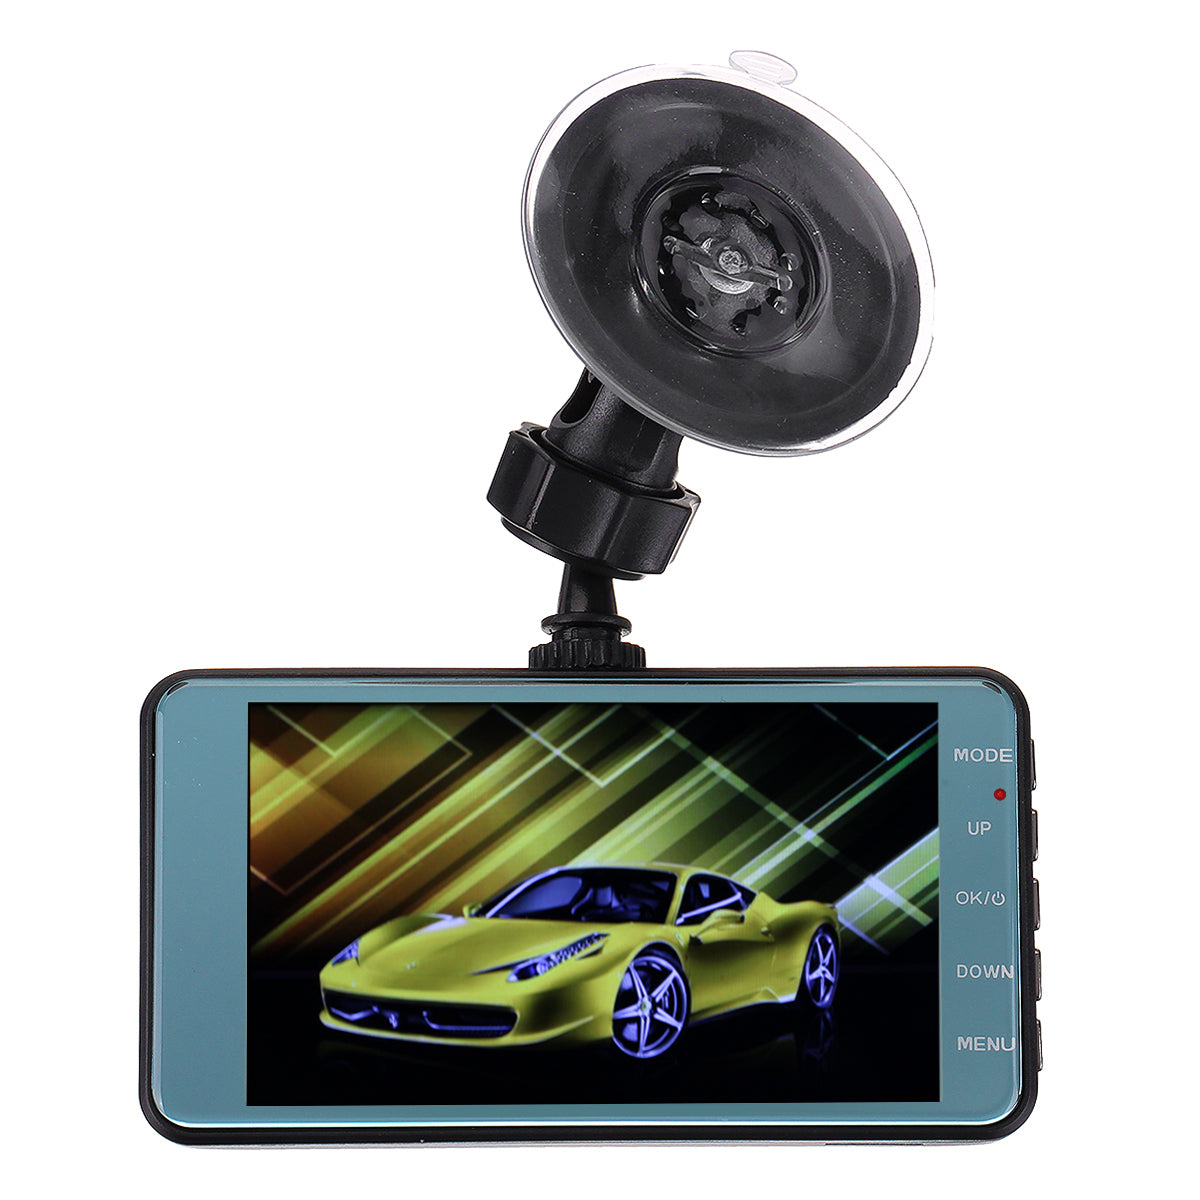 Black 4" 170° View 1080P HD Dual Lens Car DVR G-sensor Dash Cam Video Recorder Camera